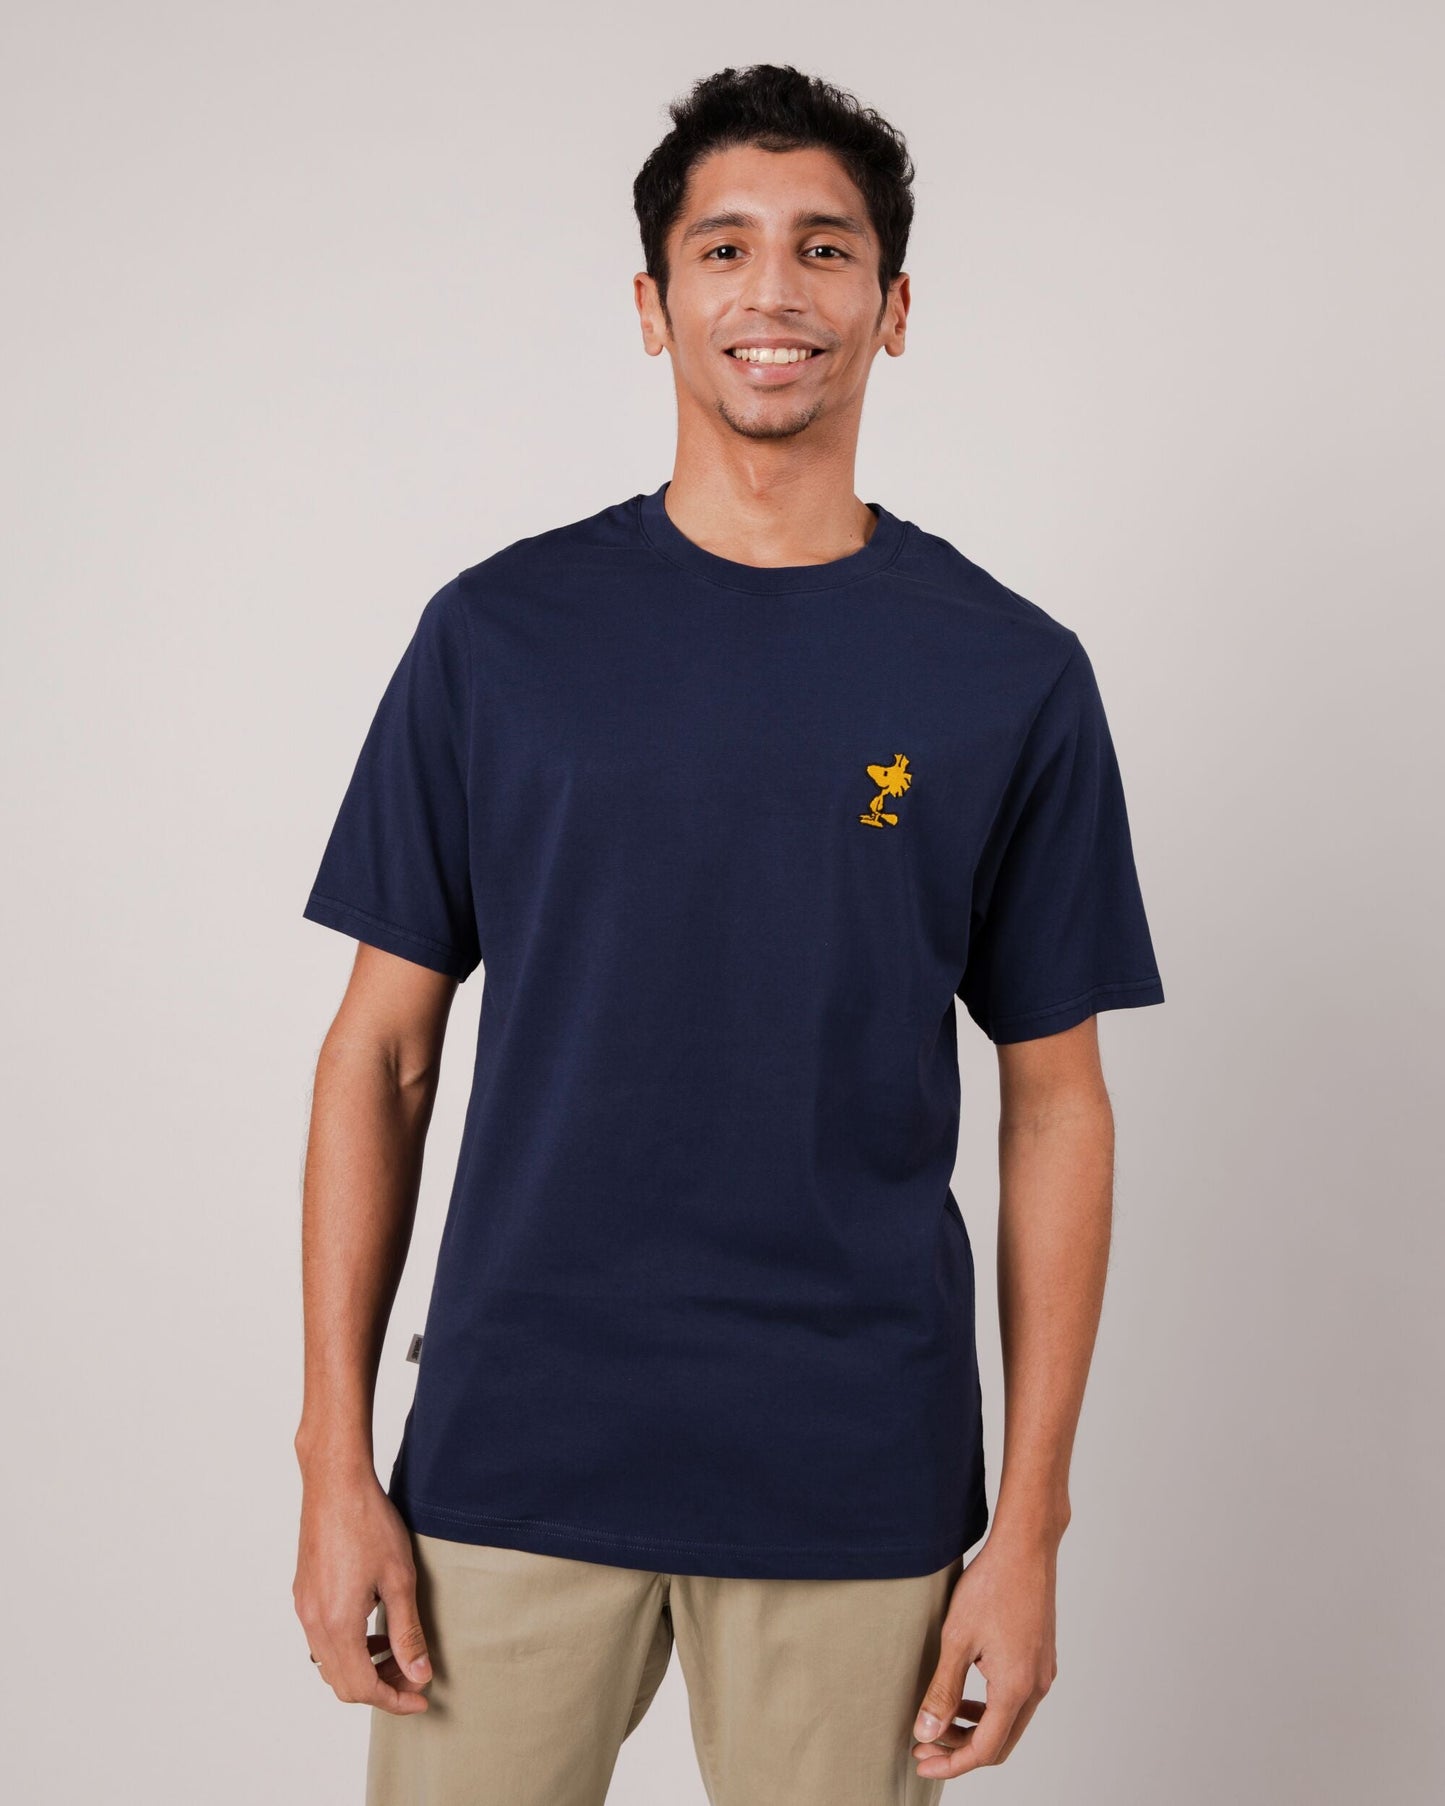 Woodstock Peanuts T-Shirt Navy